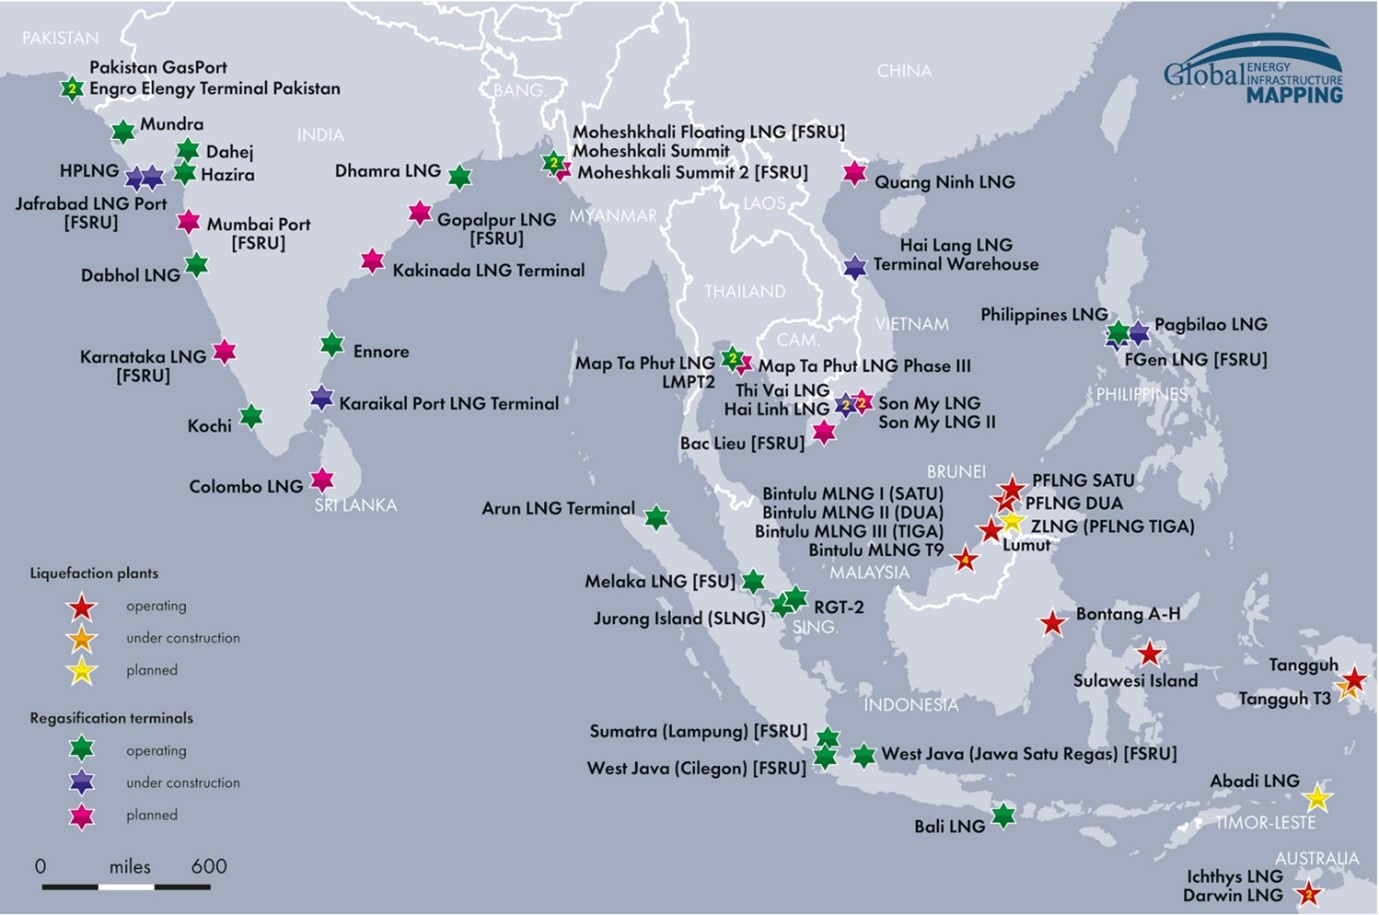 Southeast Asia embraces LNG